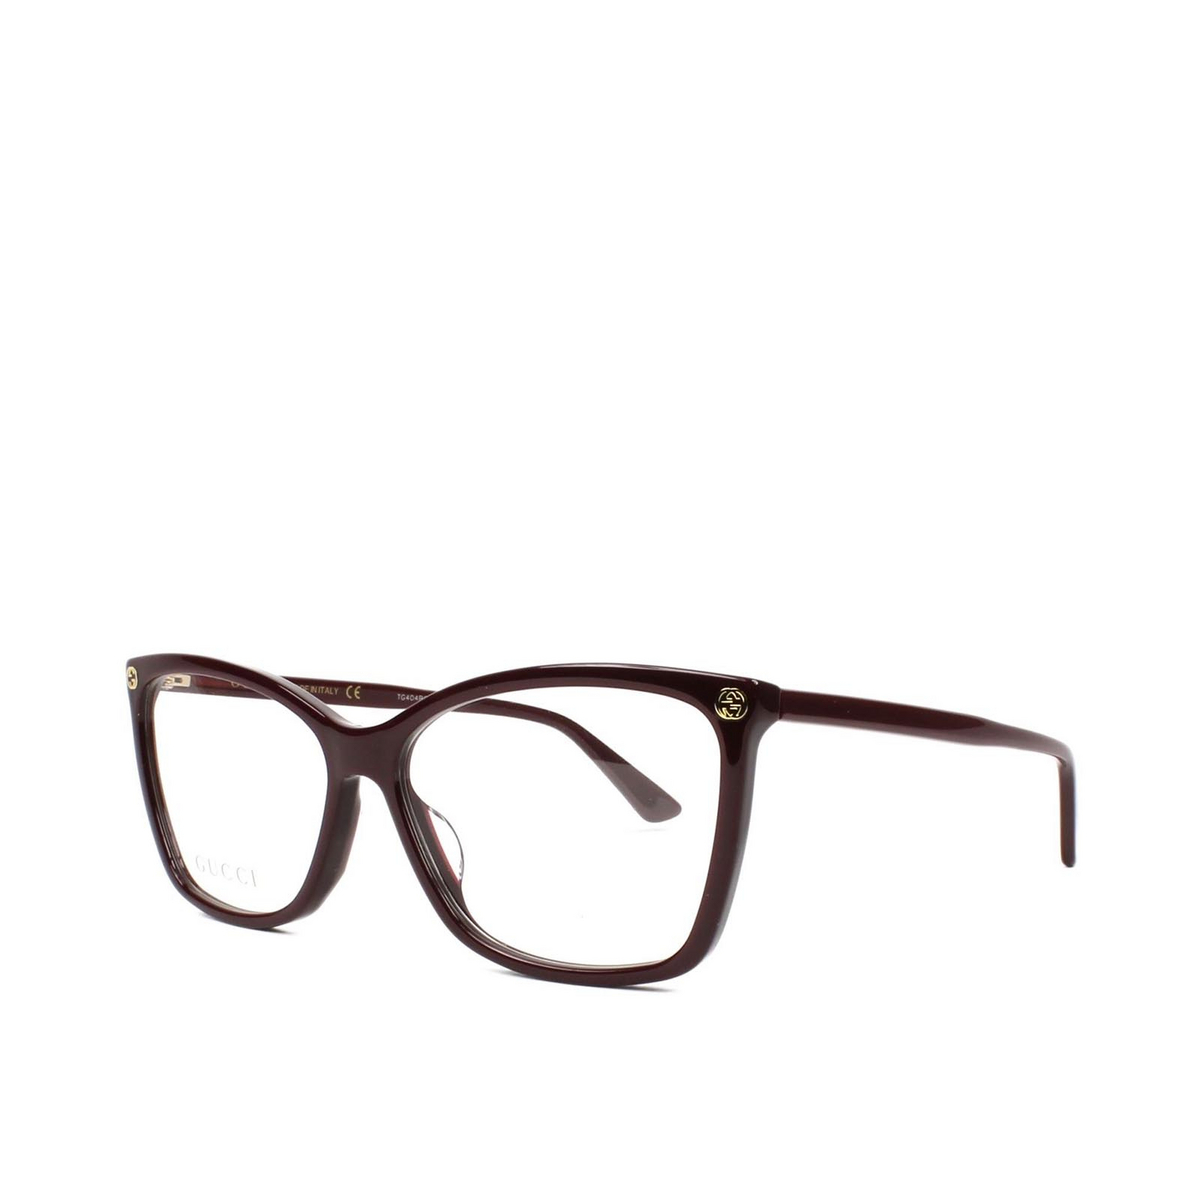 Gucci® Cat-eye Eyeglasses: GG0025O color Burgundy 007 - three-quarters view.